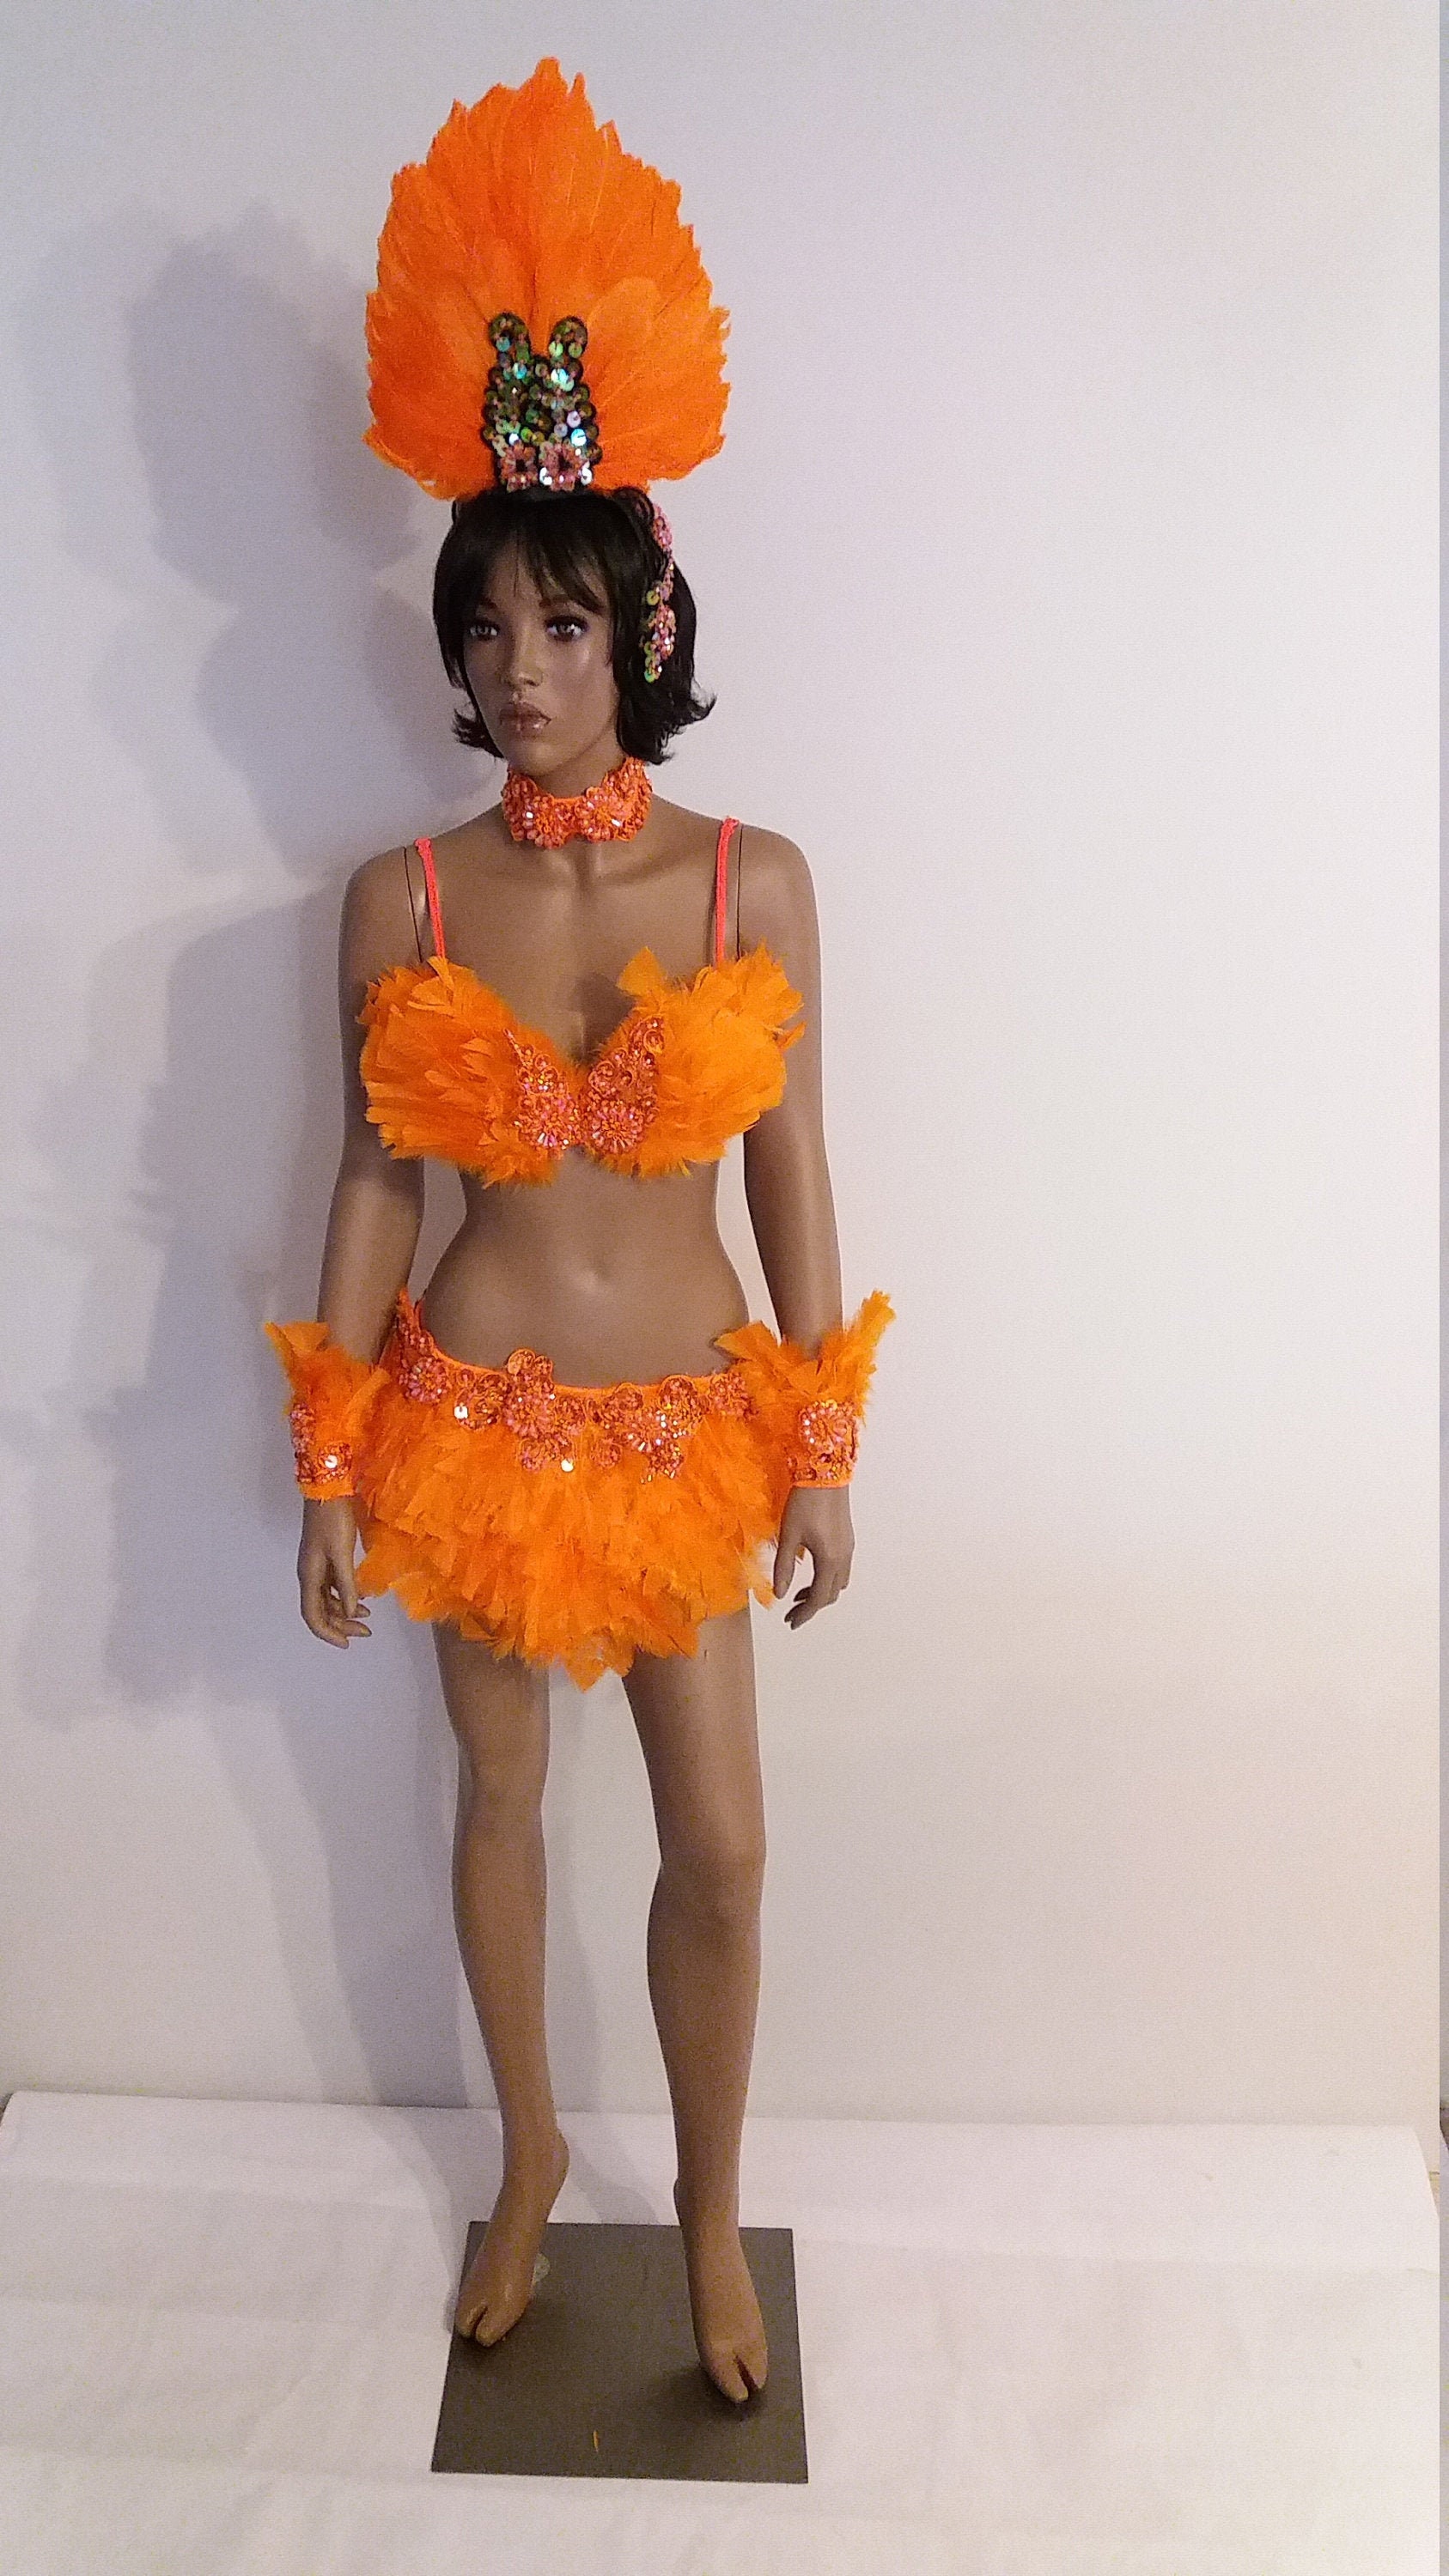 Orange BIKINI-34 Inch Size M/L Feather Skirt-samba Costumes - Etsy New  Zealand